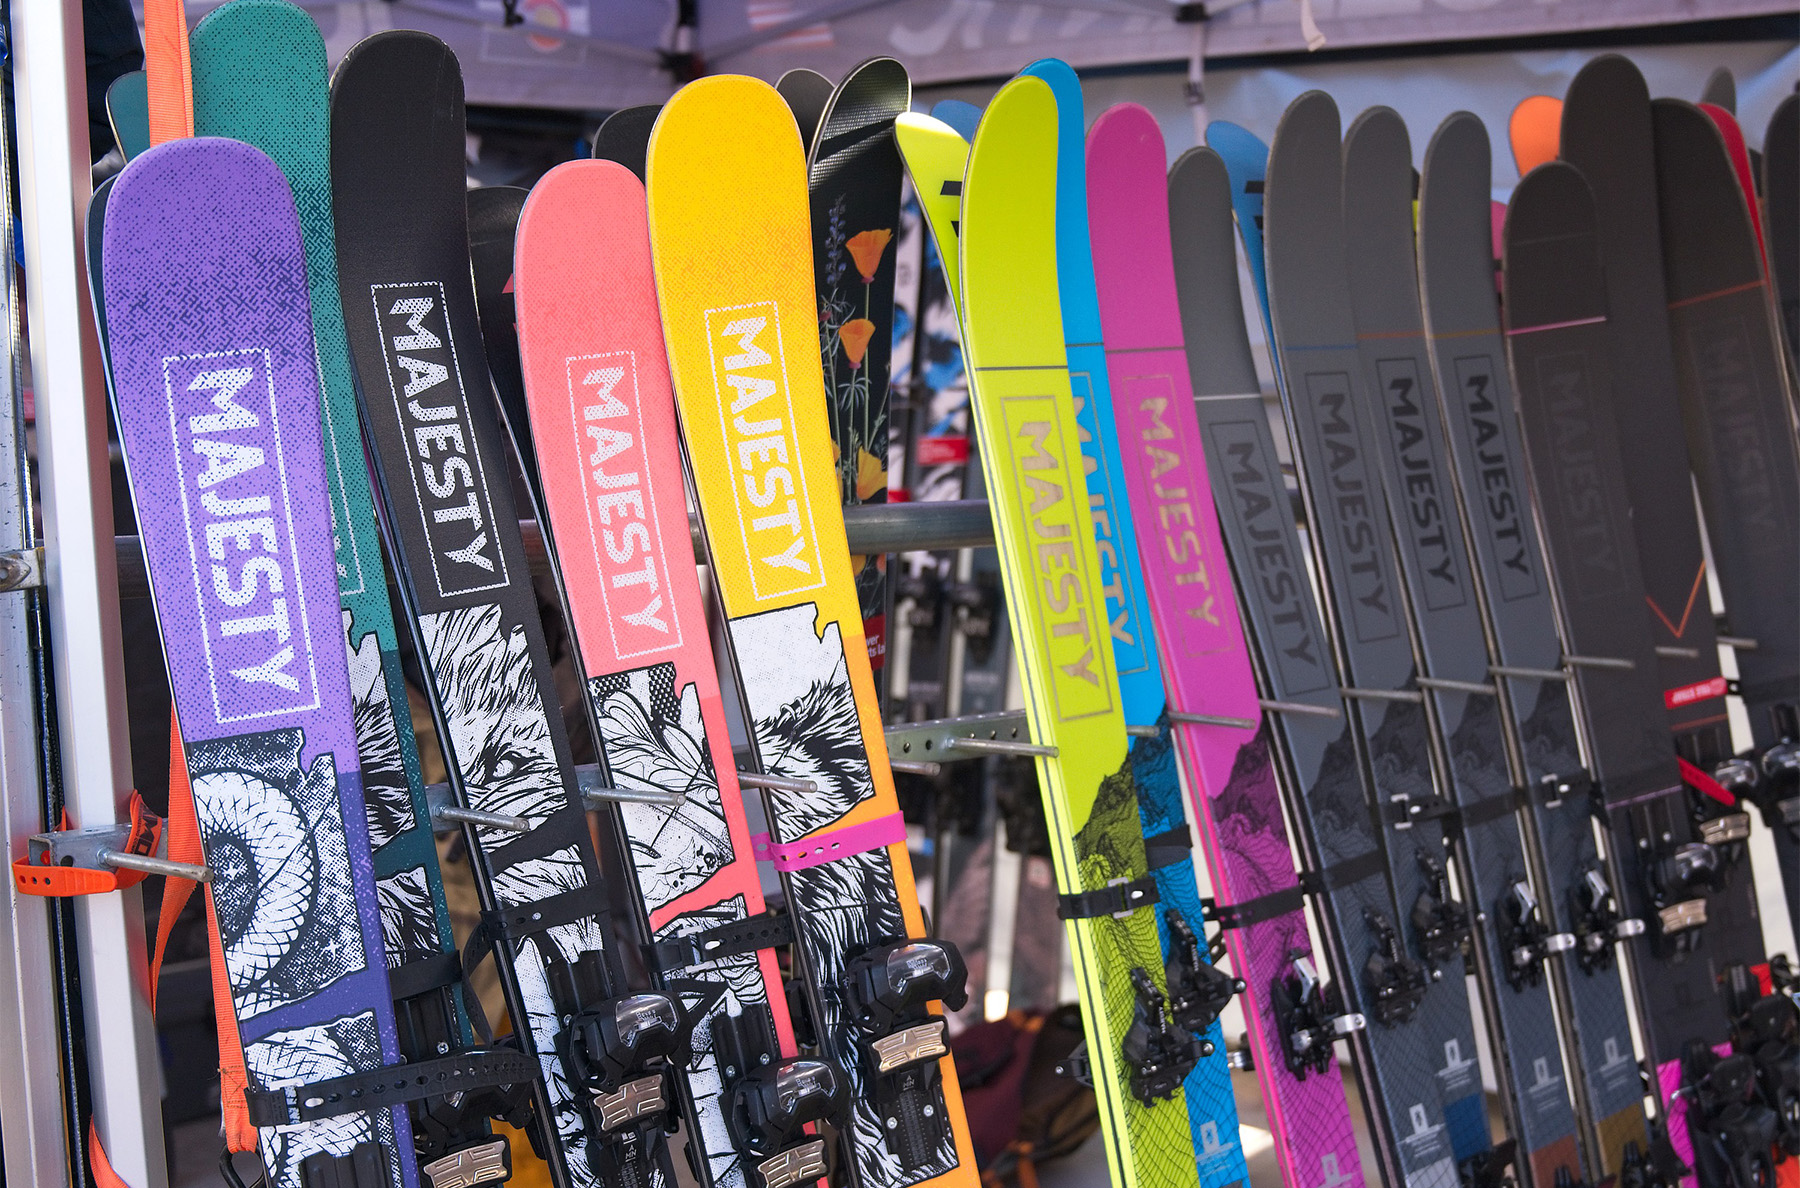 Majesty skis (Havocs far right)